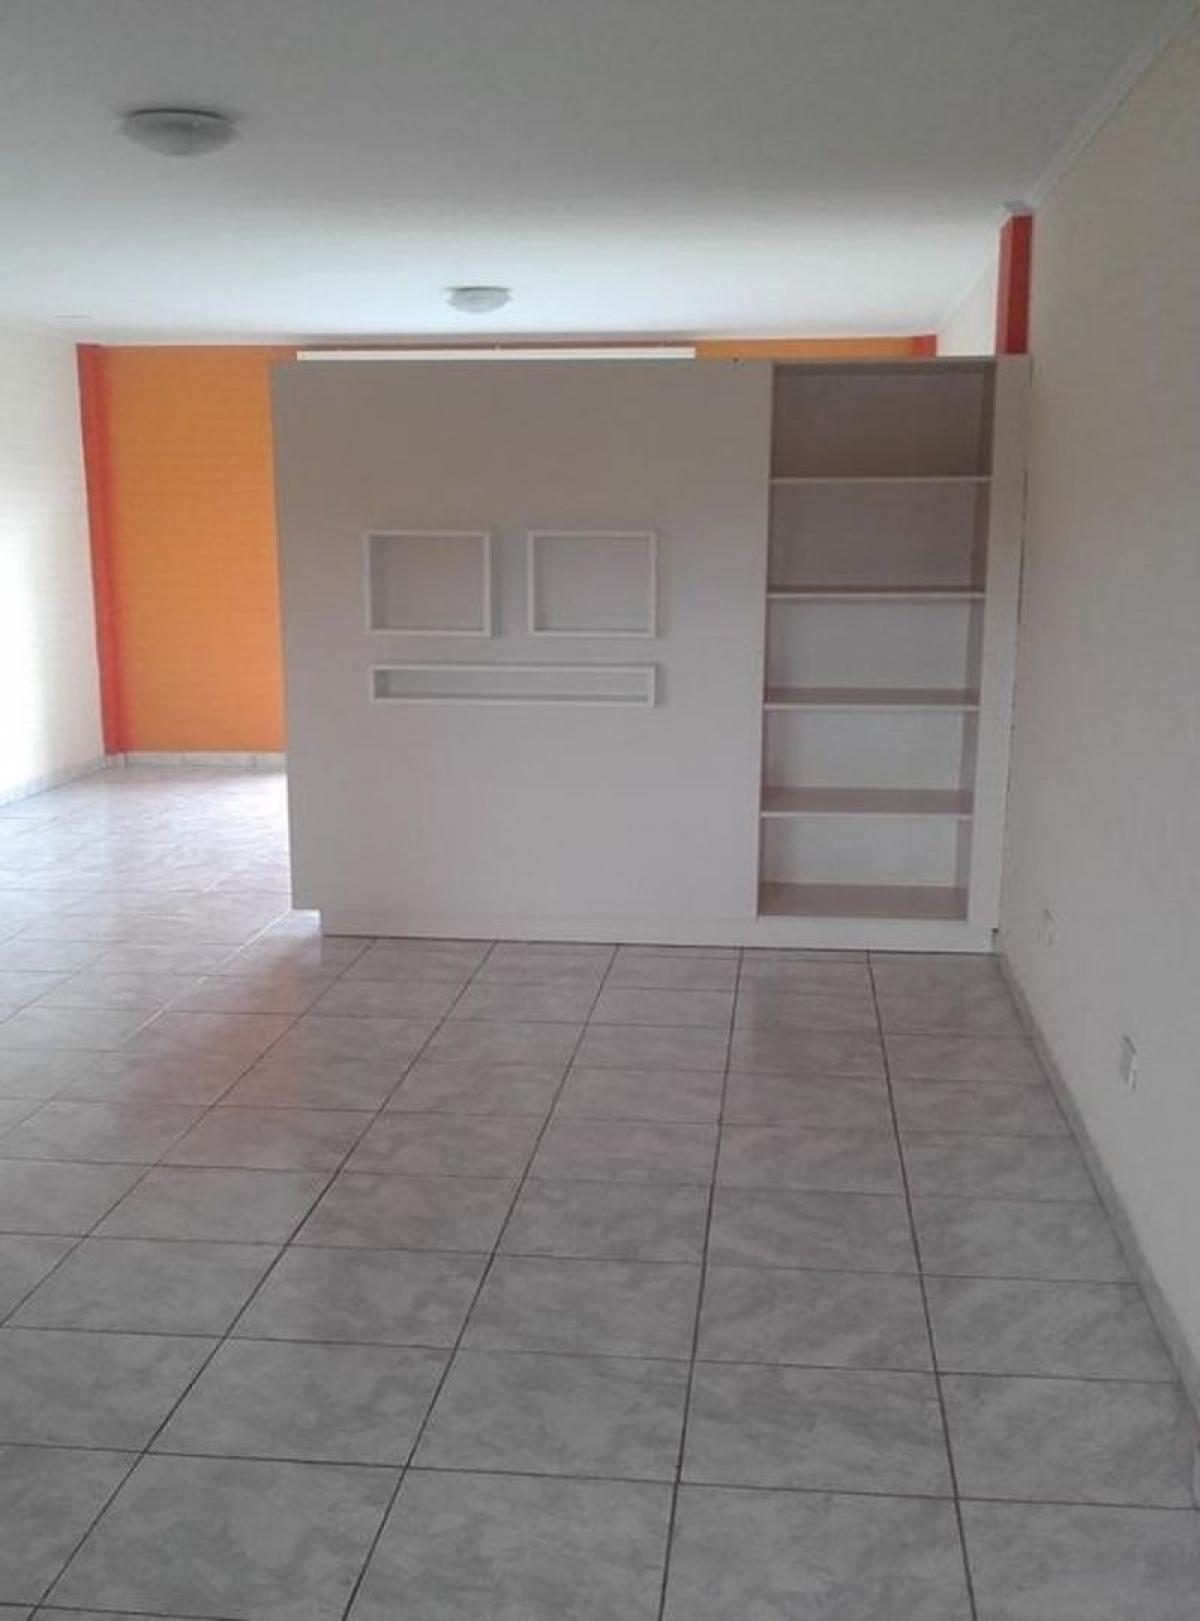 Picture of Apartment For Sale in Misiones, Misiones, Argentina